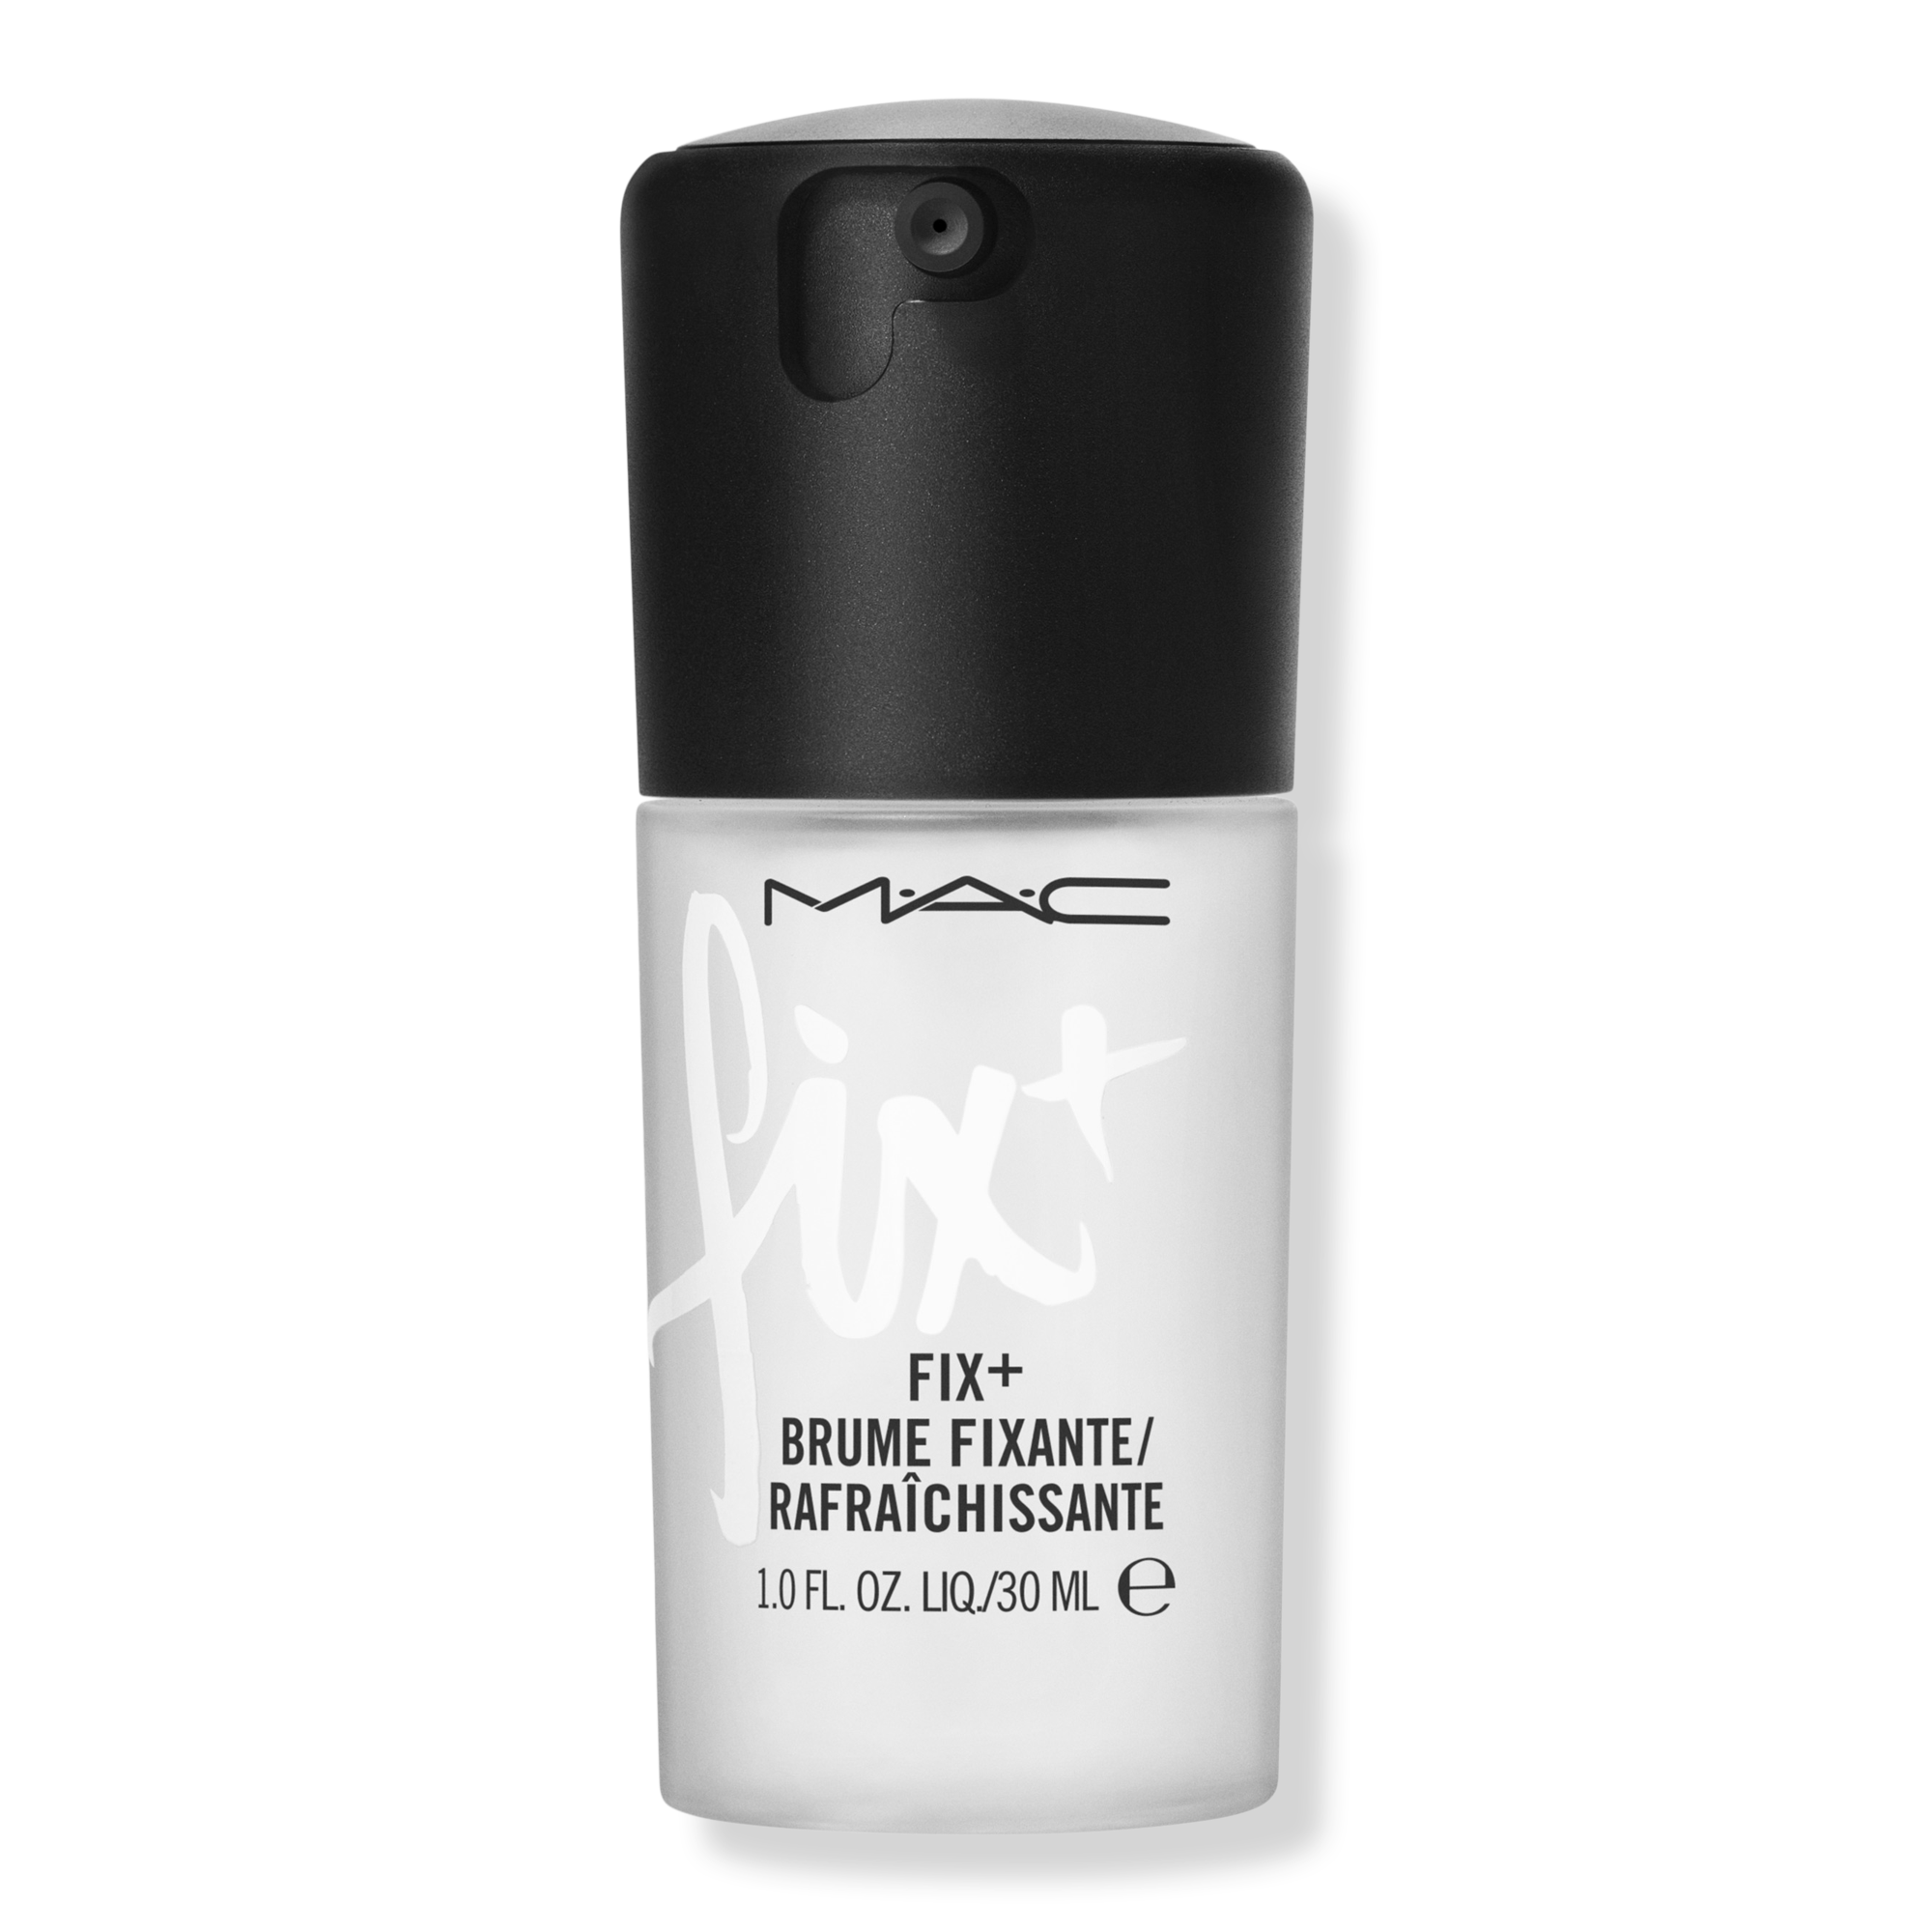 Mini MAC Prep + Prime Fix+ Primer and Setting Spray